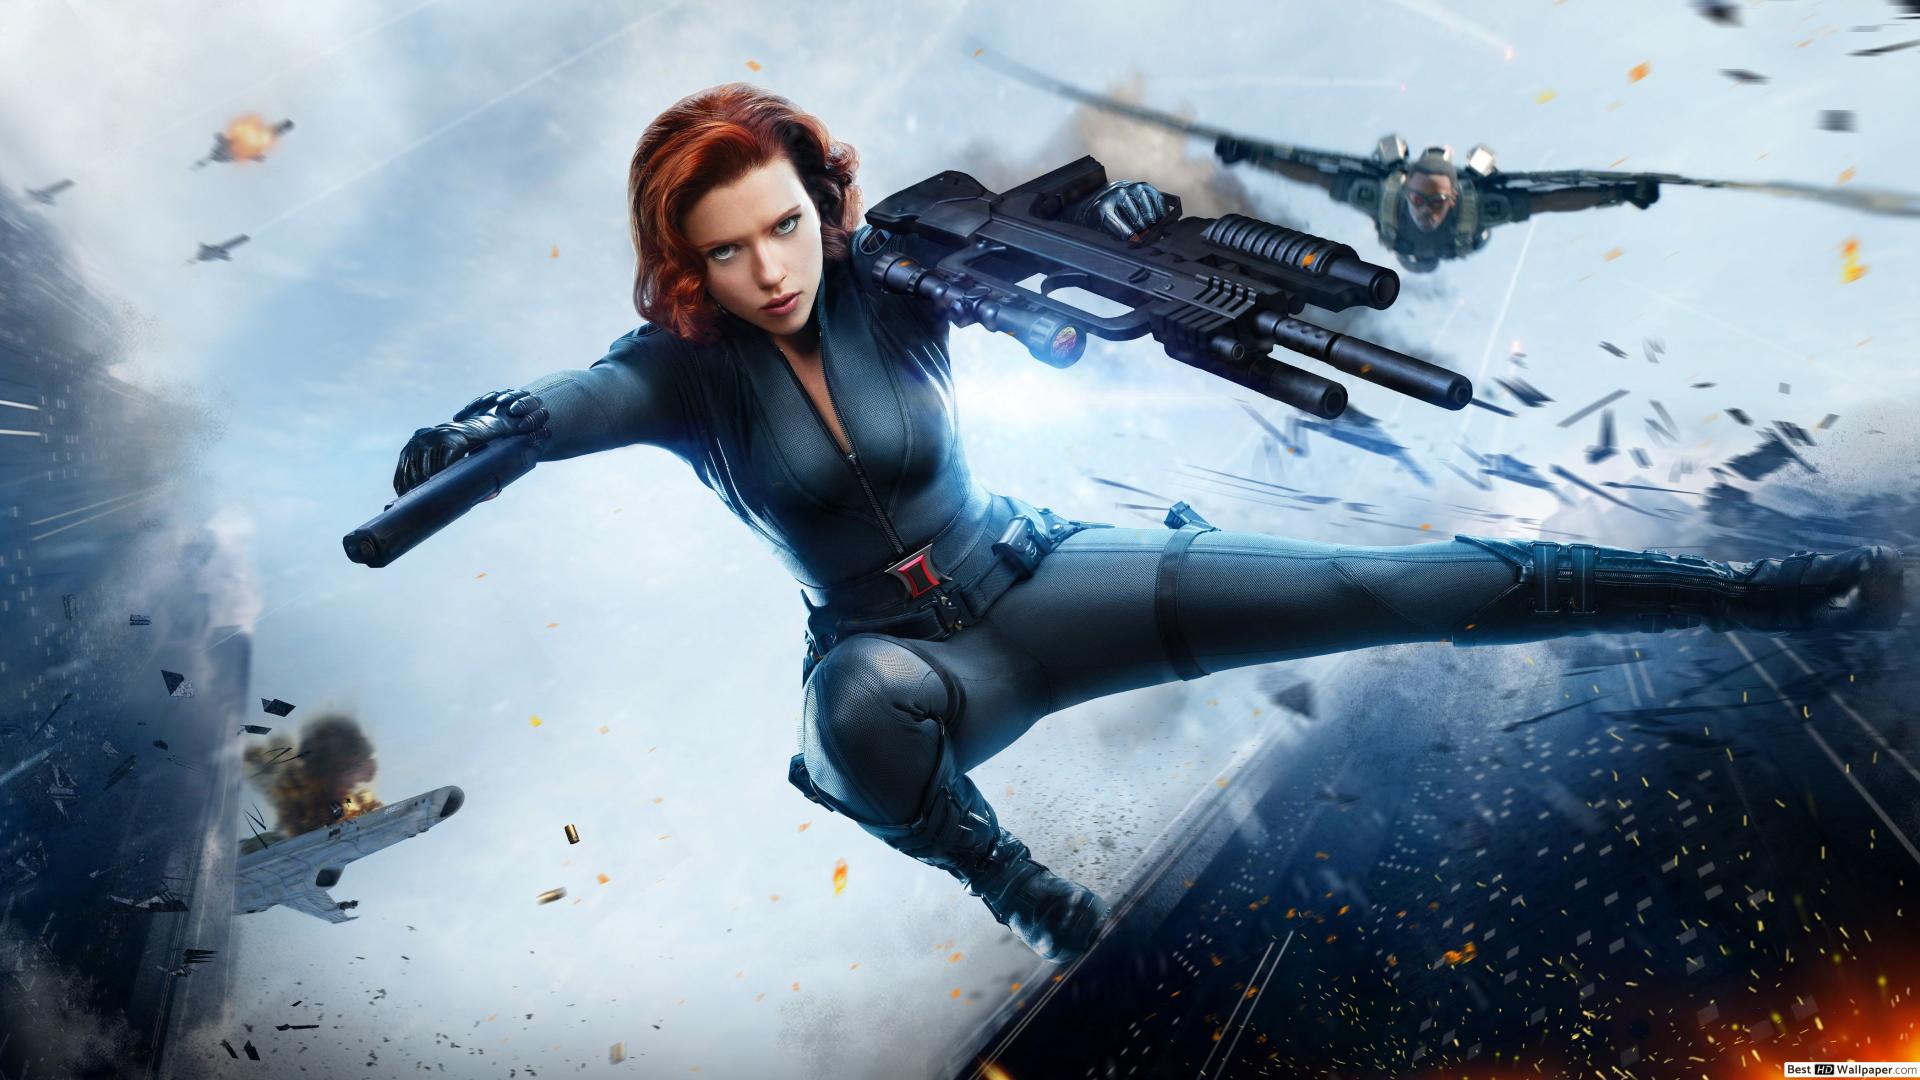 Black Widow Movie 2020 HD wallpaper download